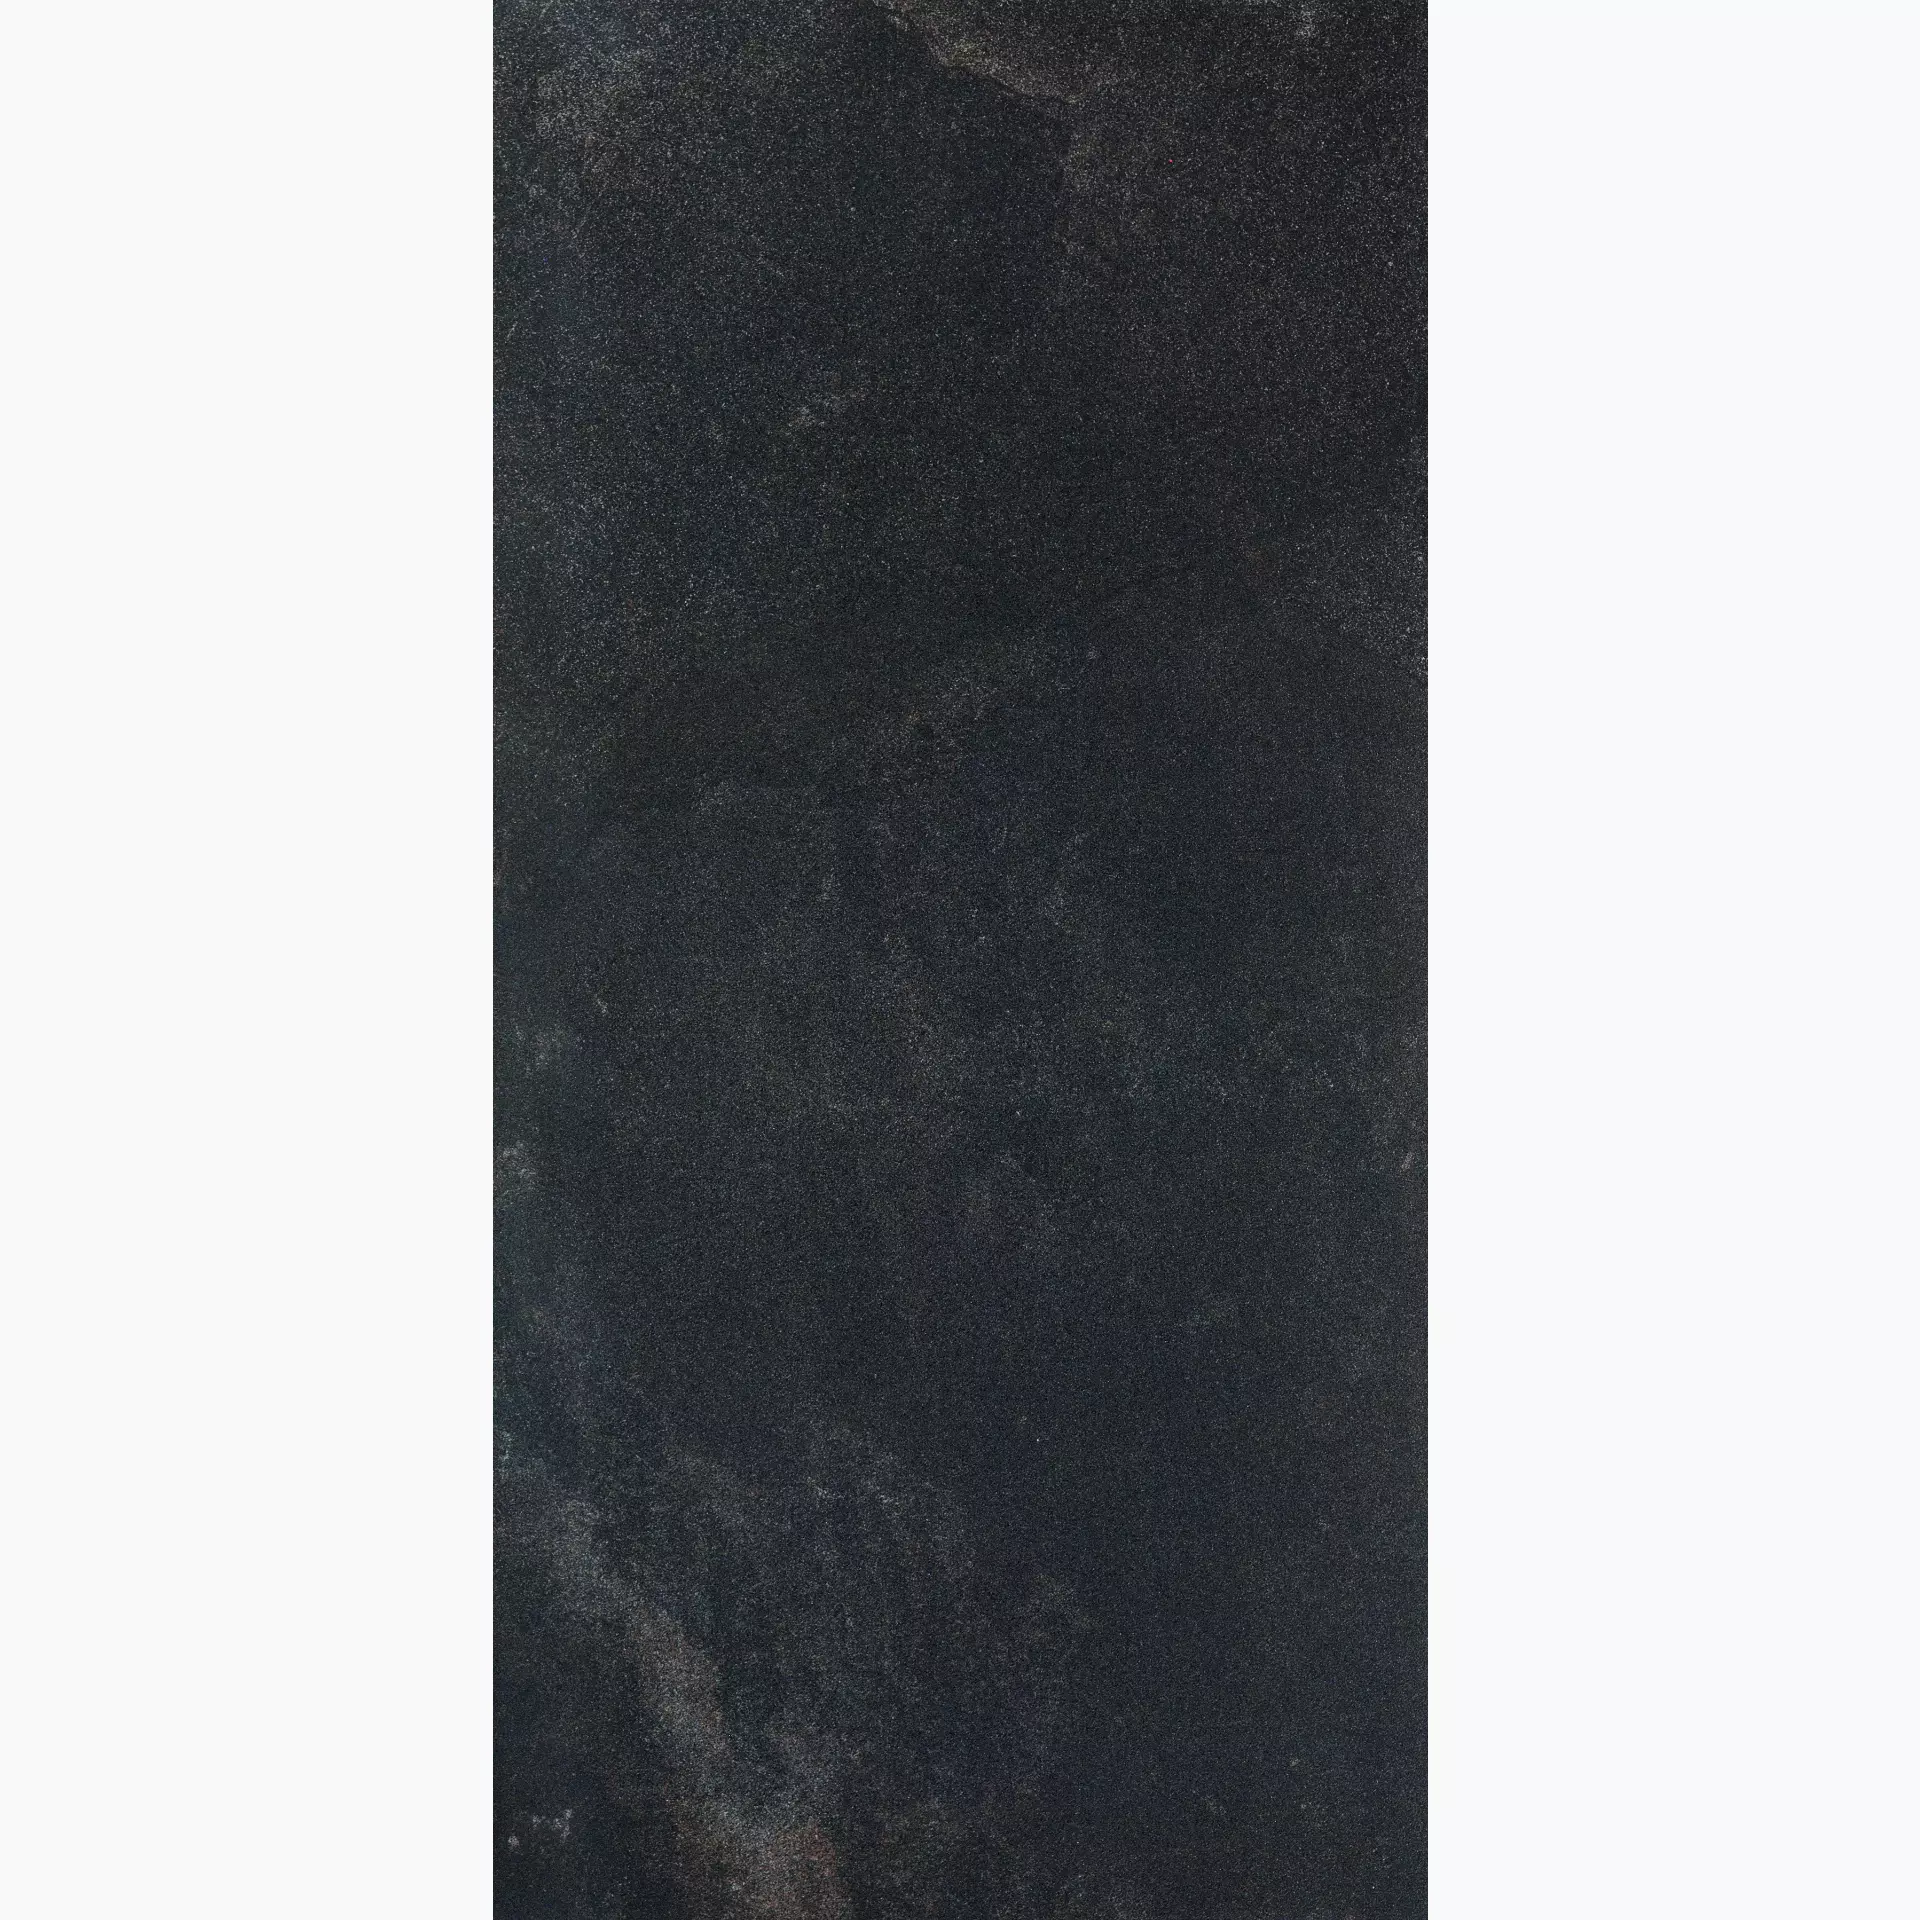 Ergon Stone Project Black Naturale Controfalda E6L1 60x120cm rectified 9,5mm